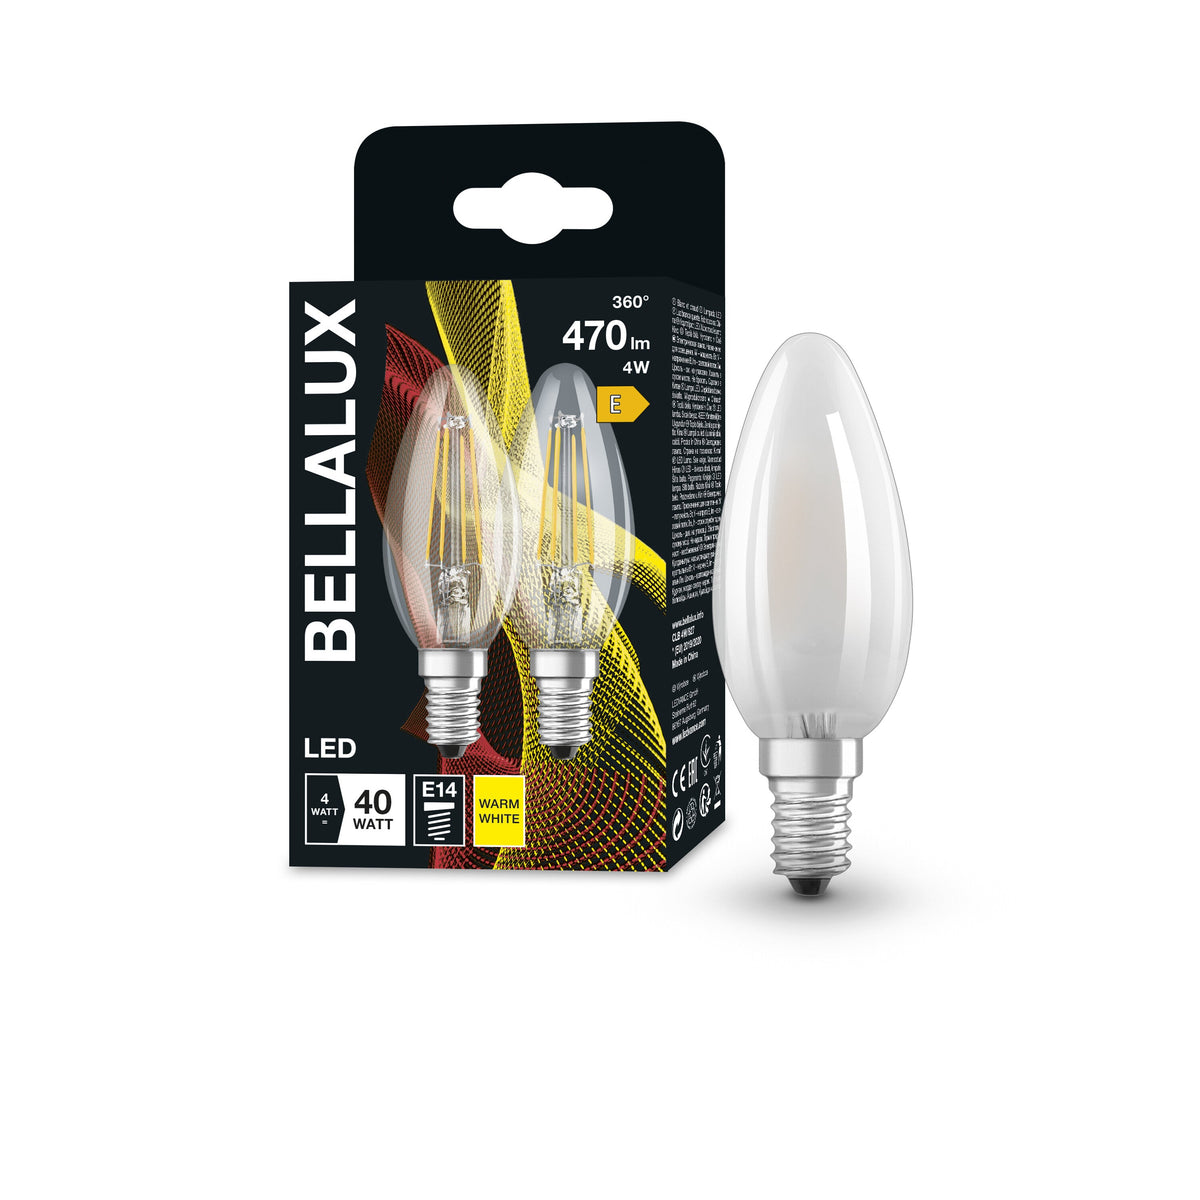 BELLALUX LED-Lampe, Sockel: E14, Warm White, 2700 K, 4 W, Ersatz für 40-W-Glühbirne, klar, ST CLAS B